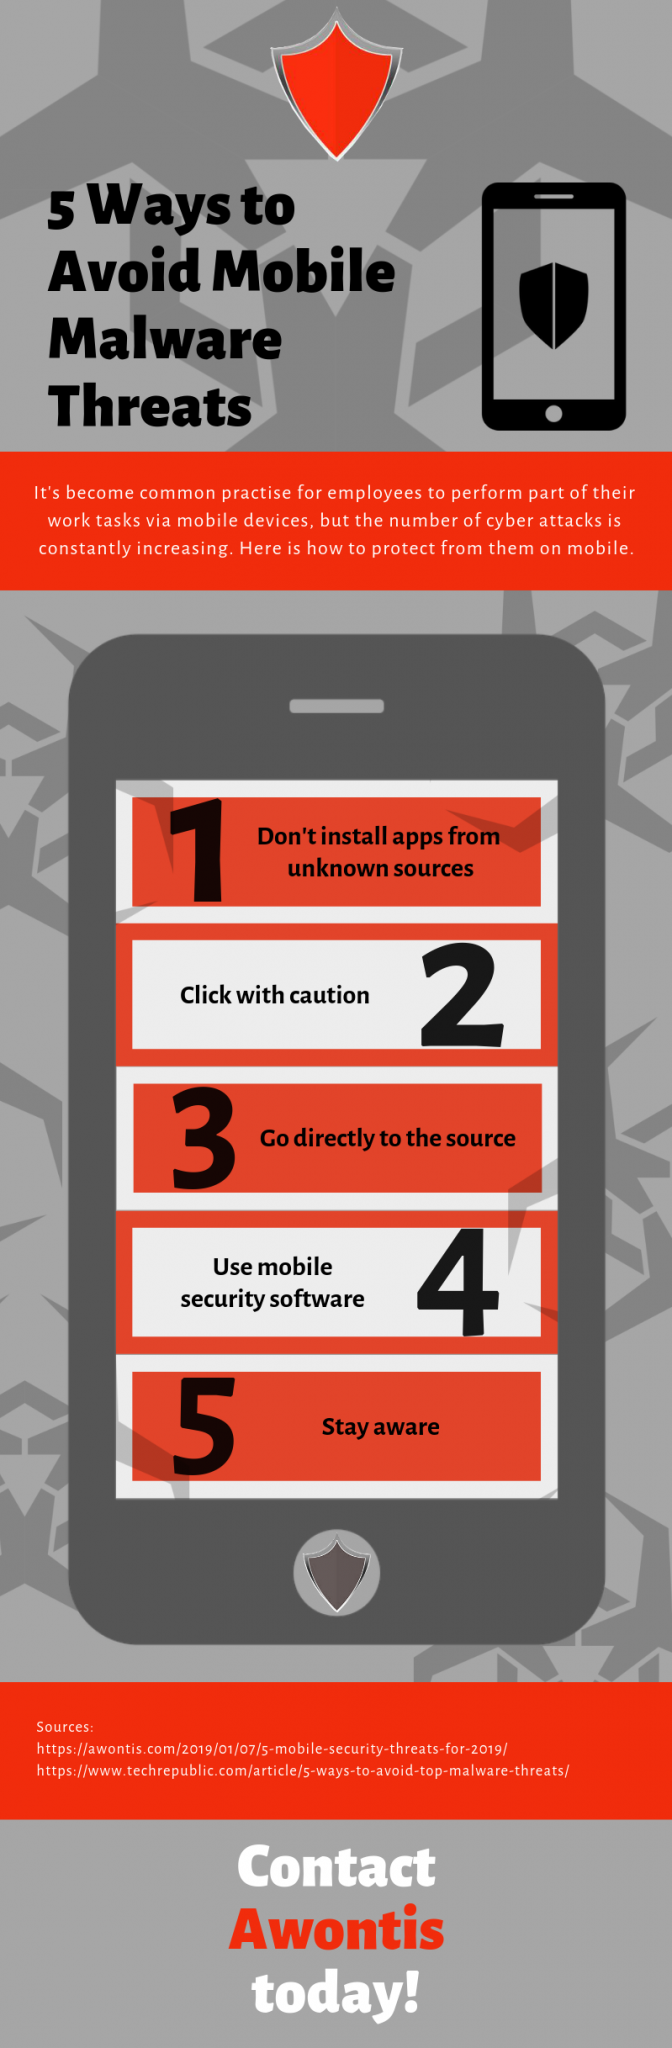 5 Ways To Avoid Mobile Malware Threats Infographic Awontis